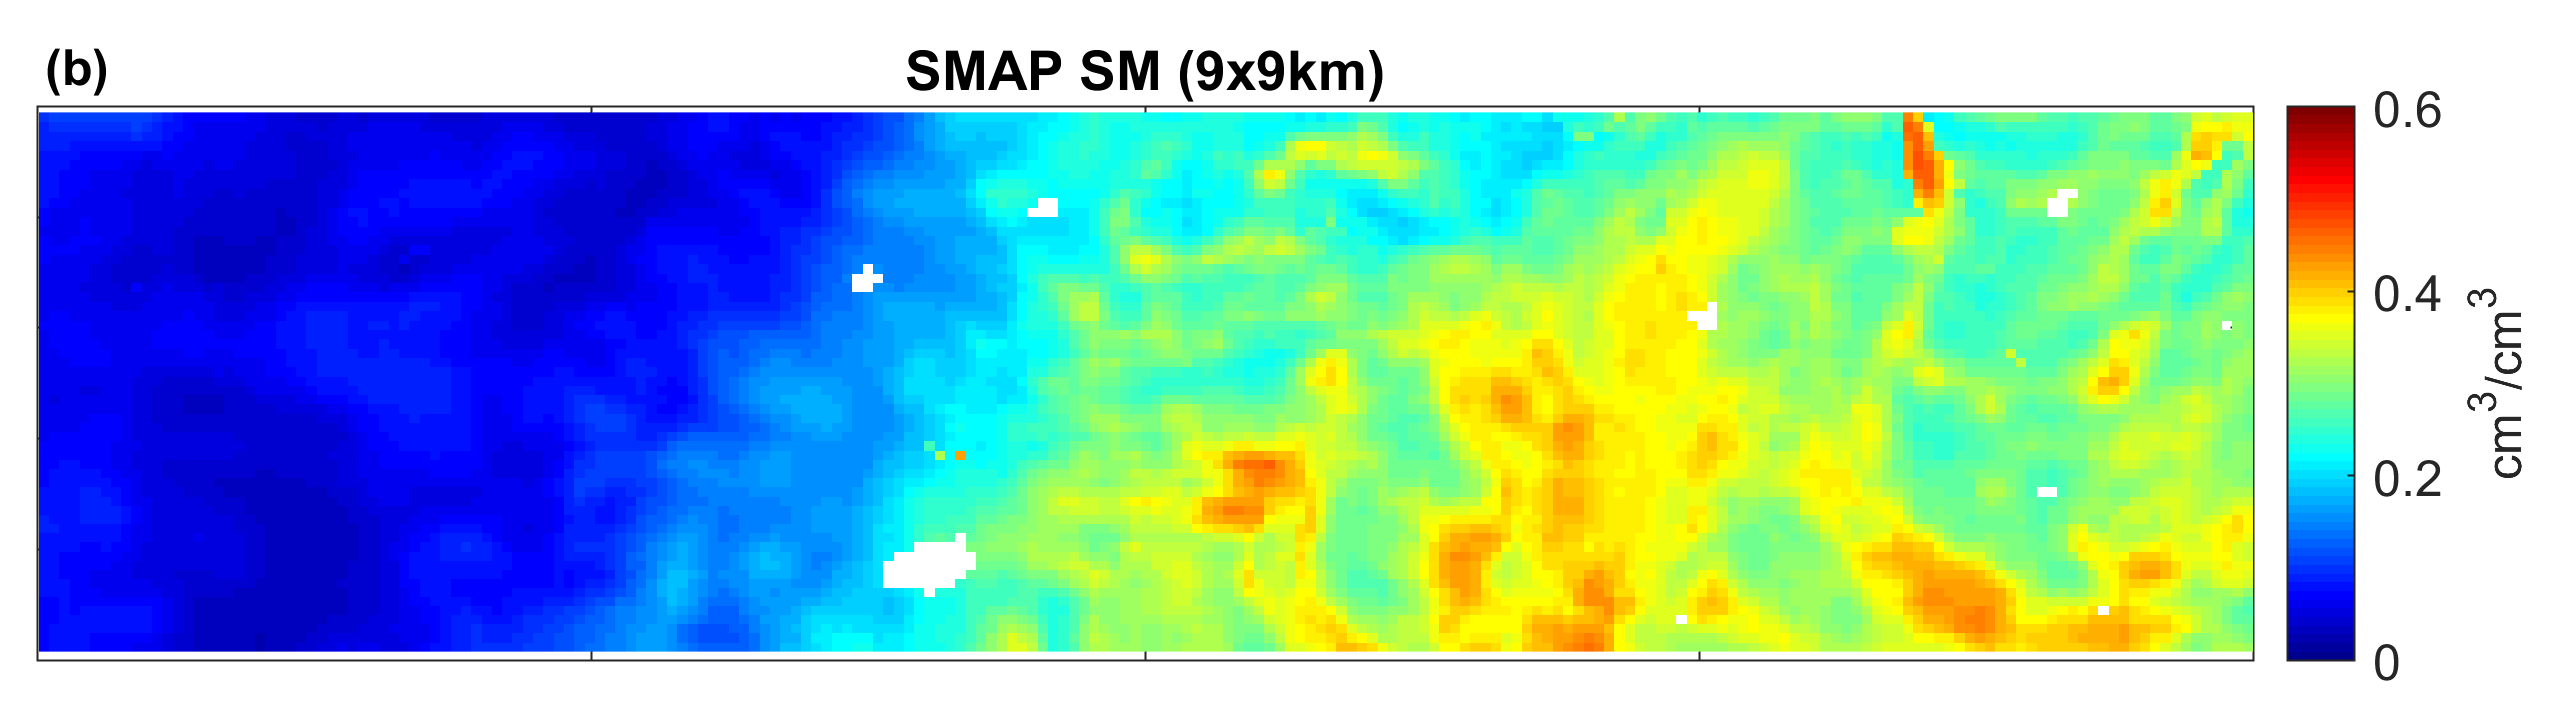 SMAP SM (9x9km)